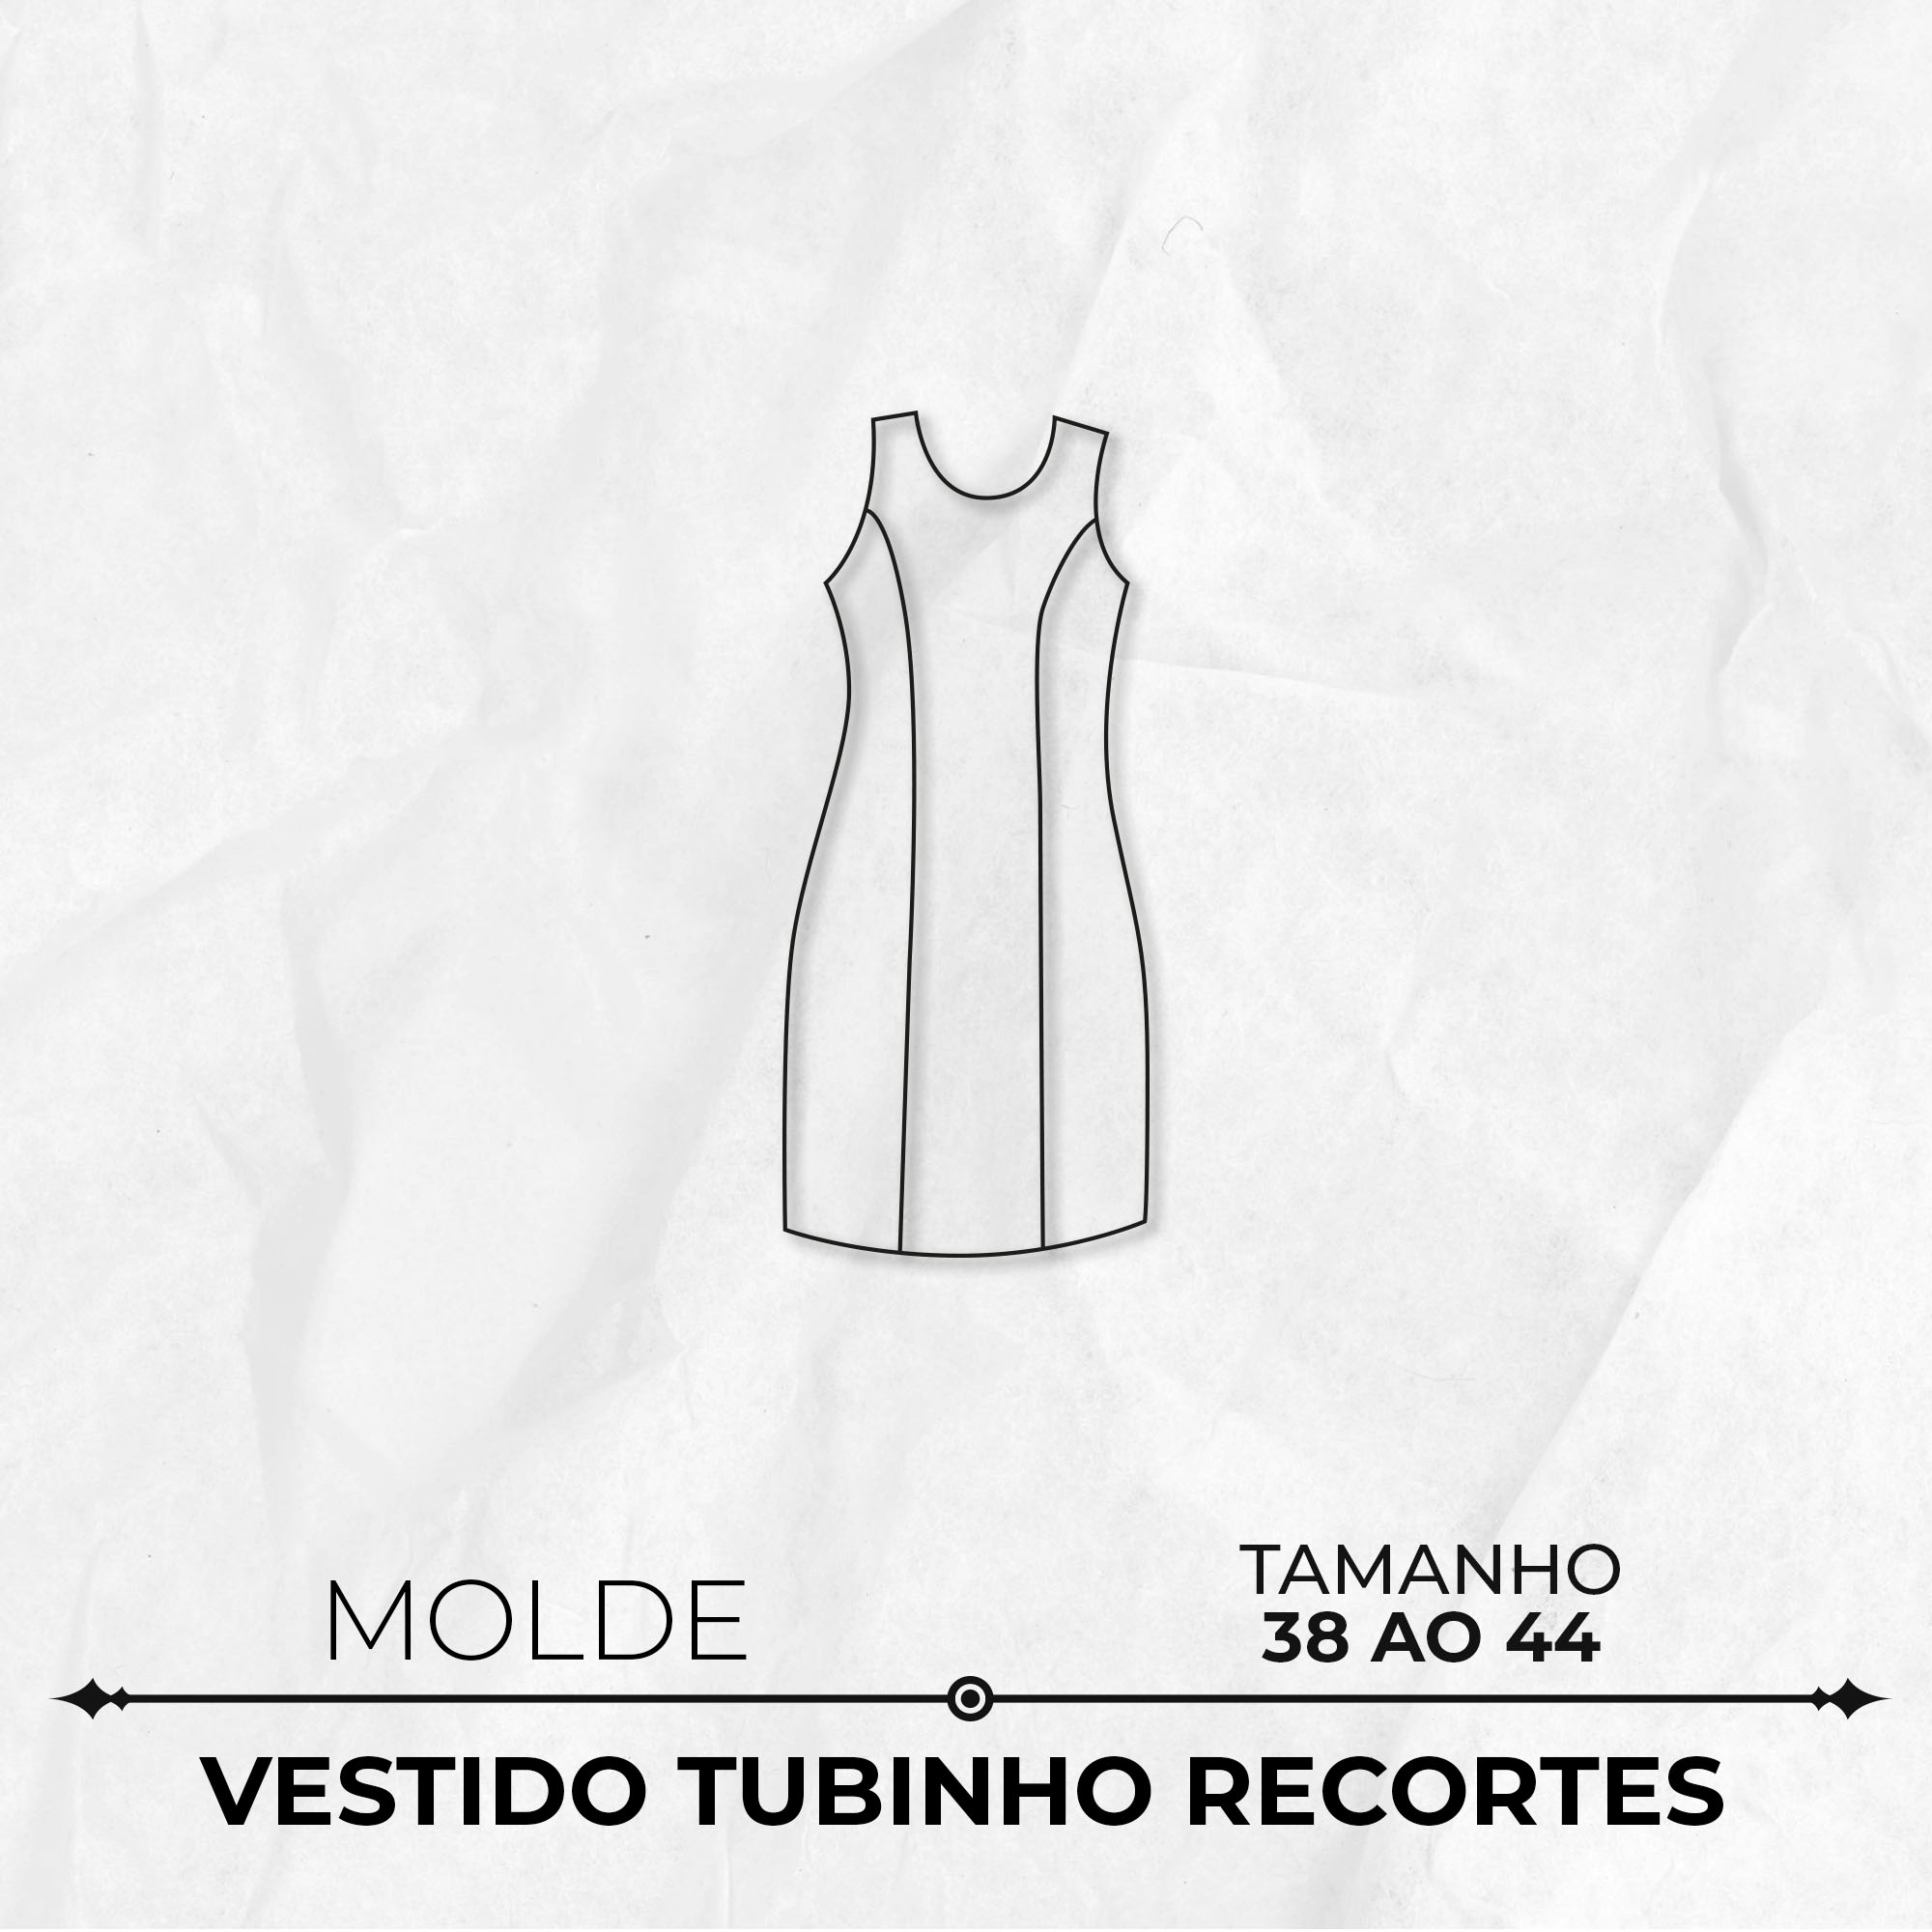 Molde vestido tubinho recortes tamanho 38 ao 44 by Marlene Mukai